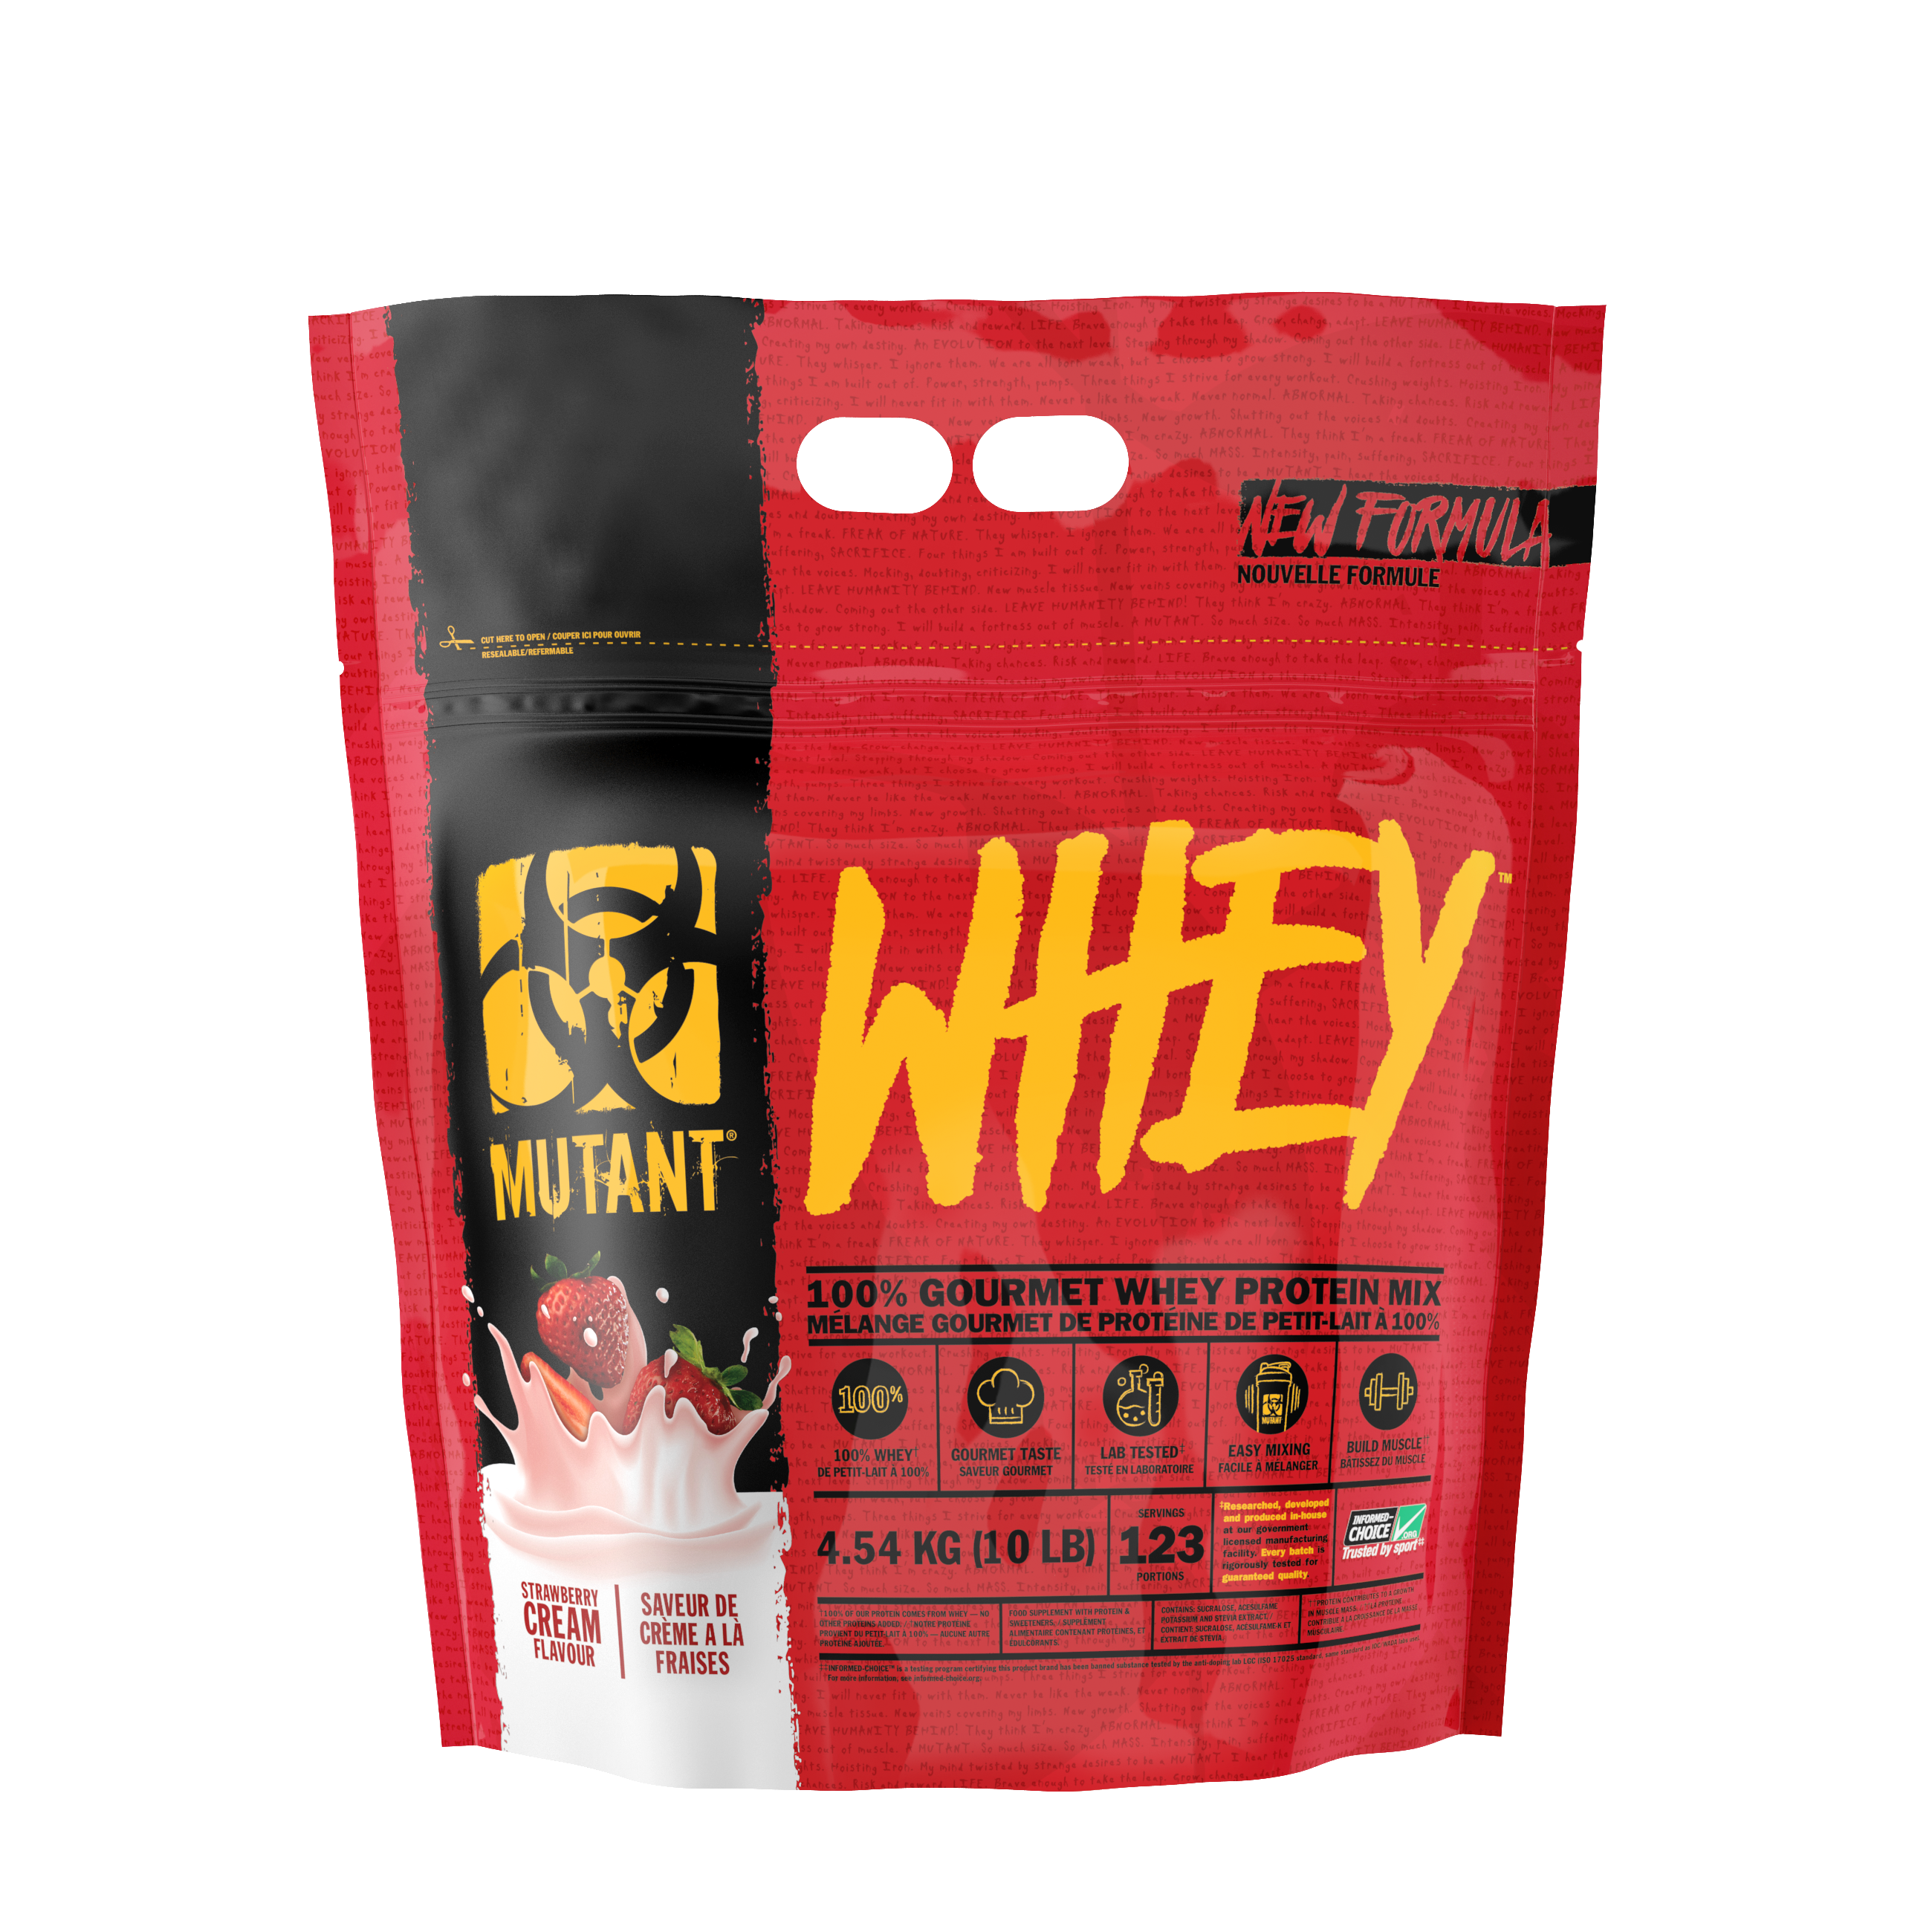 Mutant Whey (10 lbs) Whey Protein Strawberry and Cream Mutant